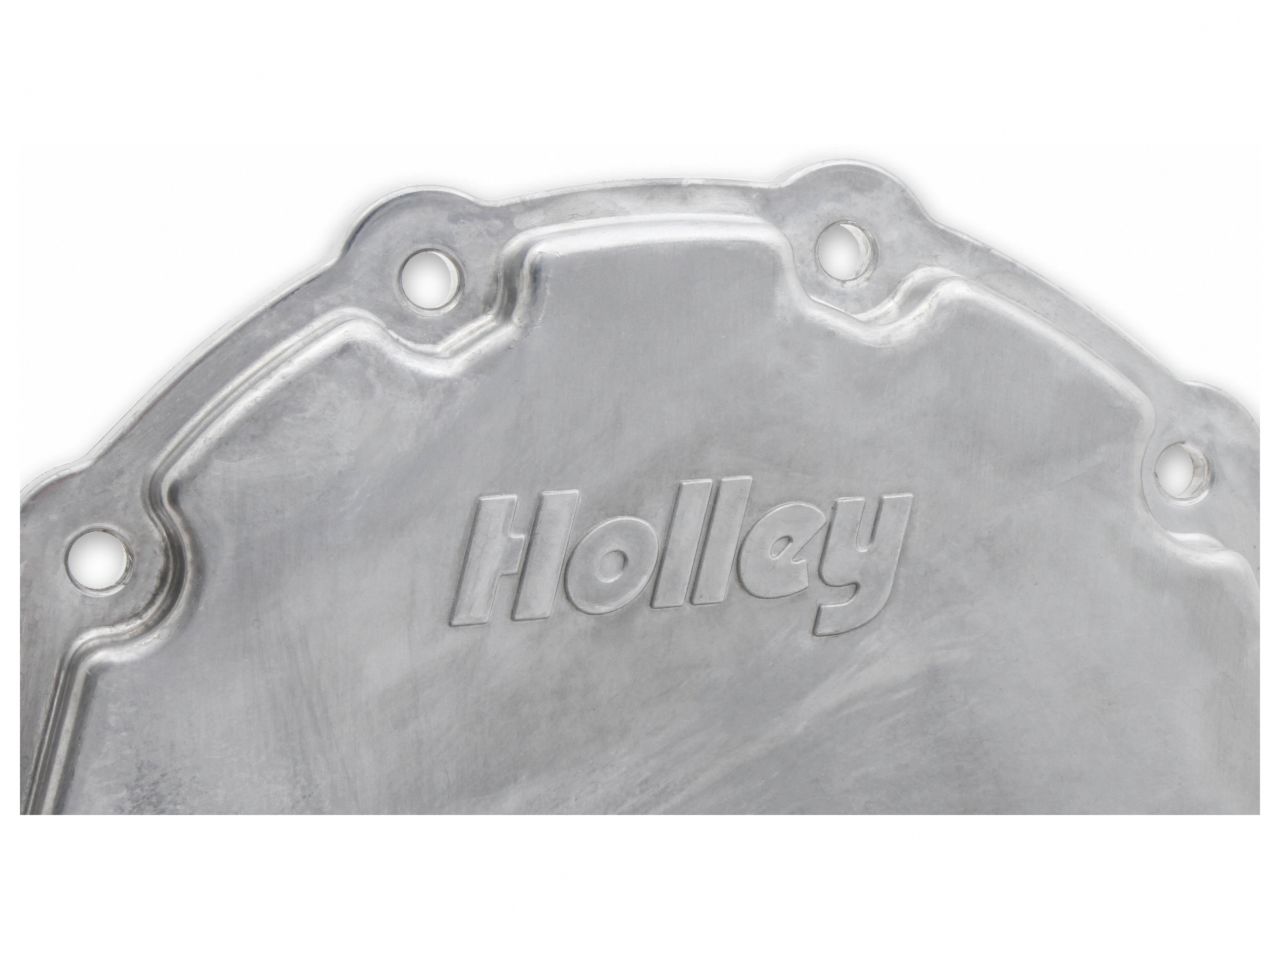 Holley  Cast Aluminum Timing Chain Cover w/Crank Sensor